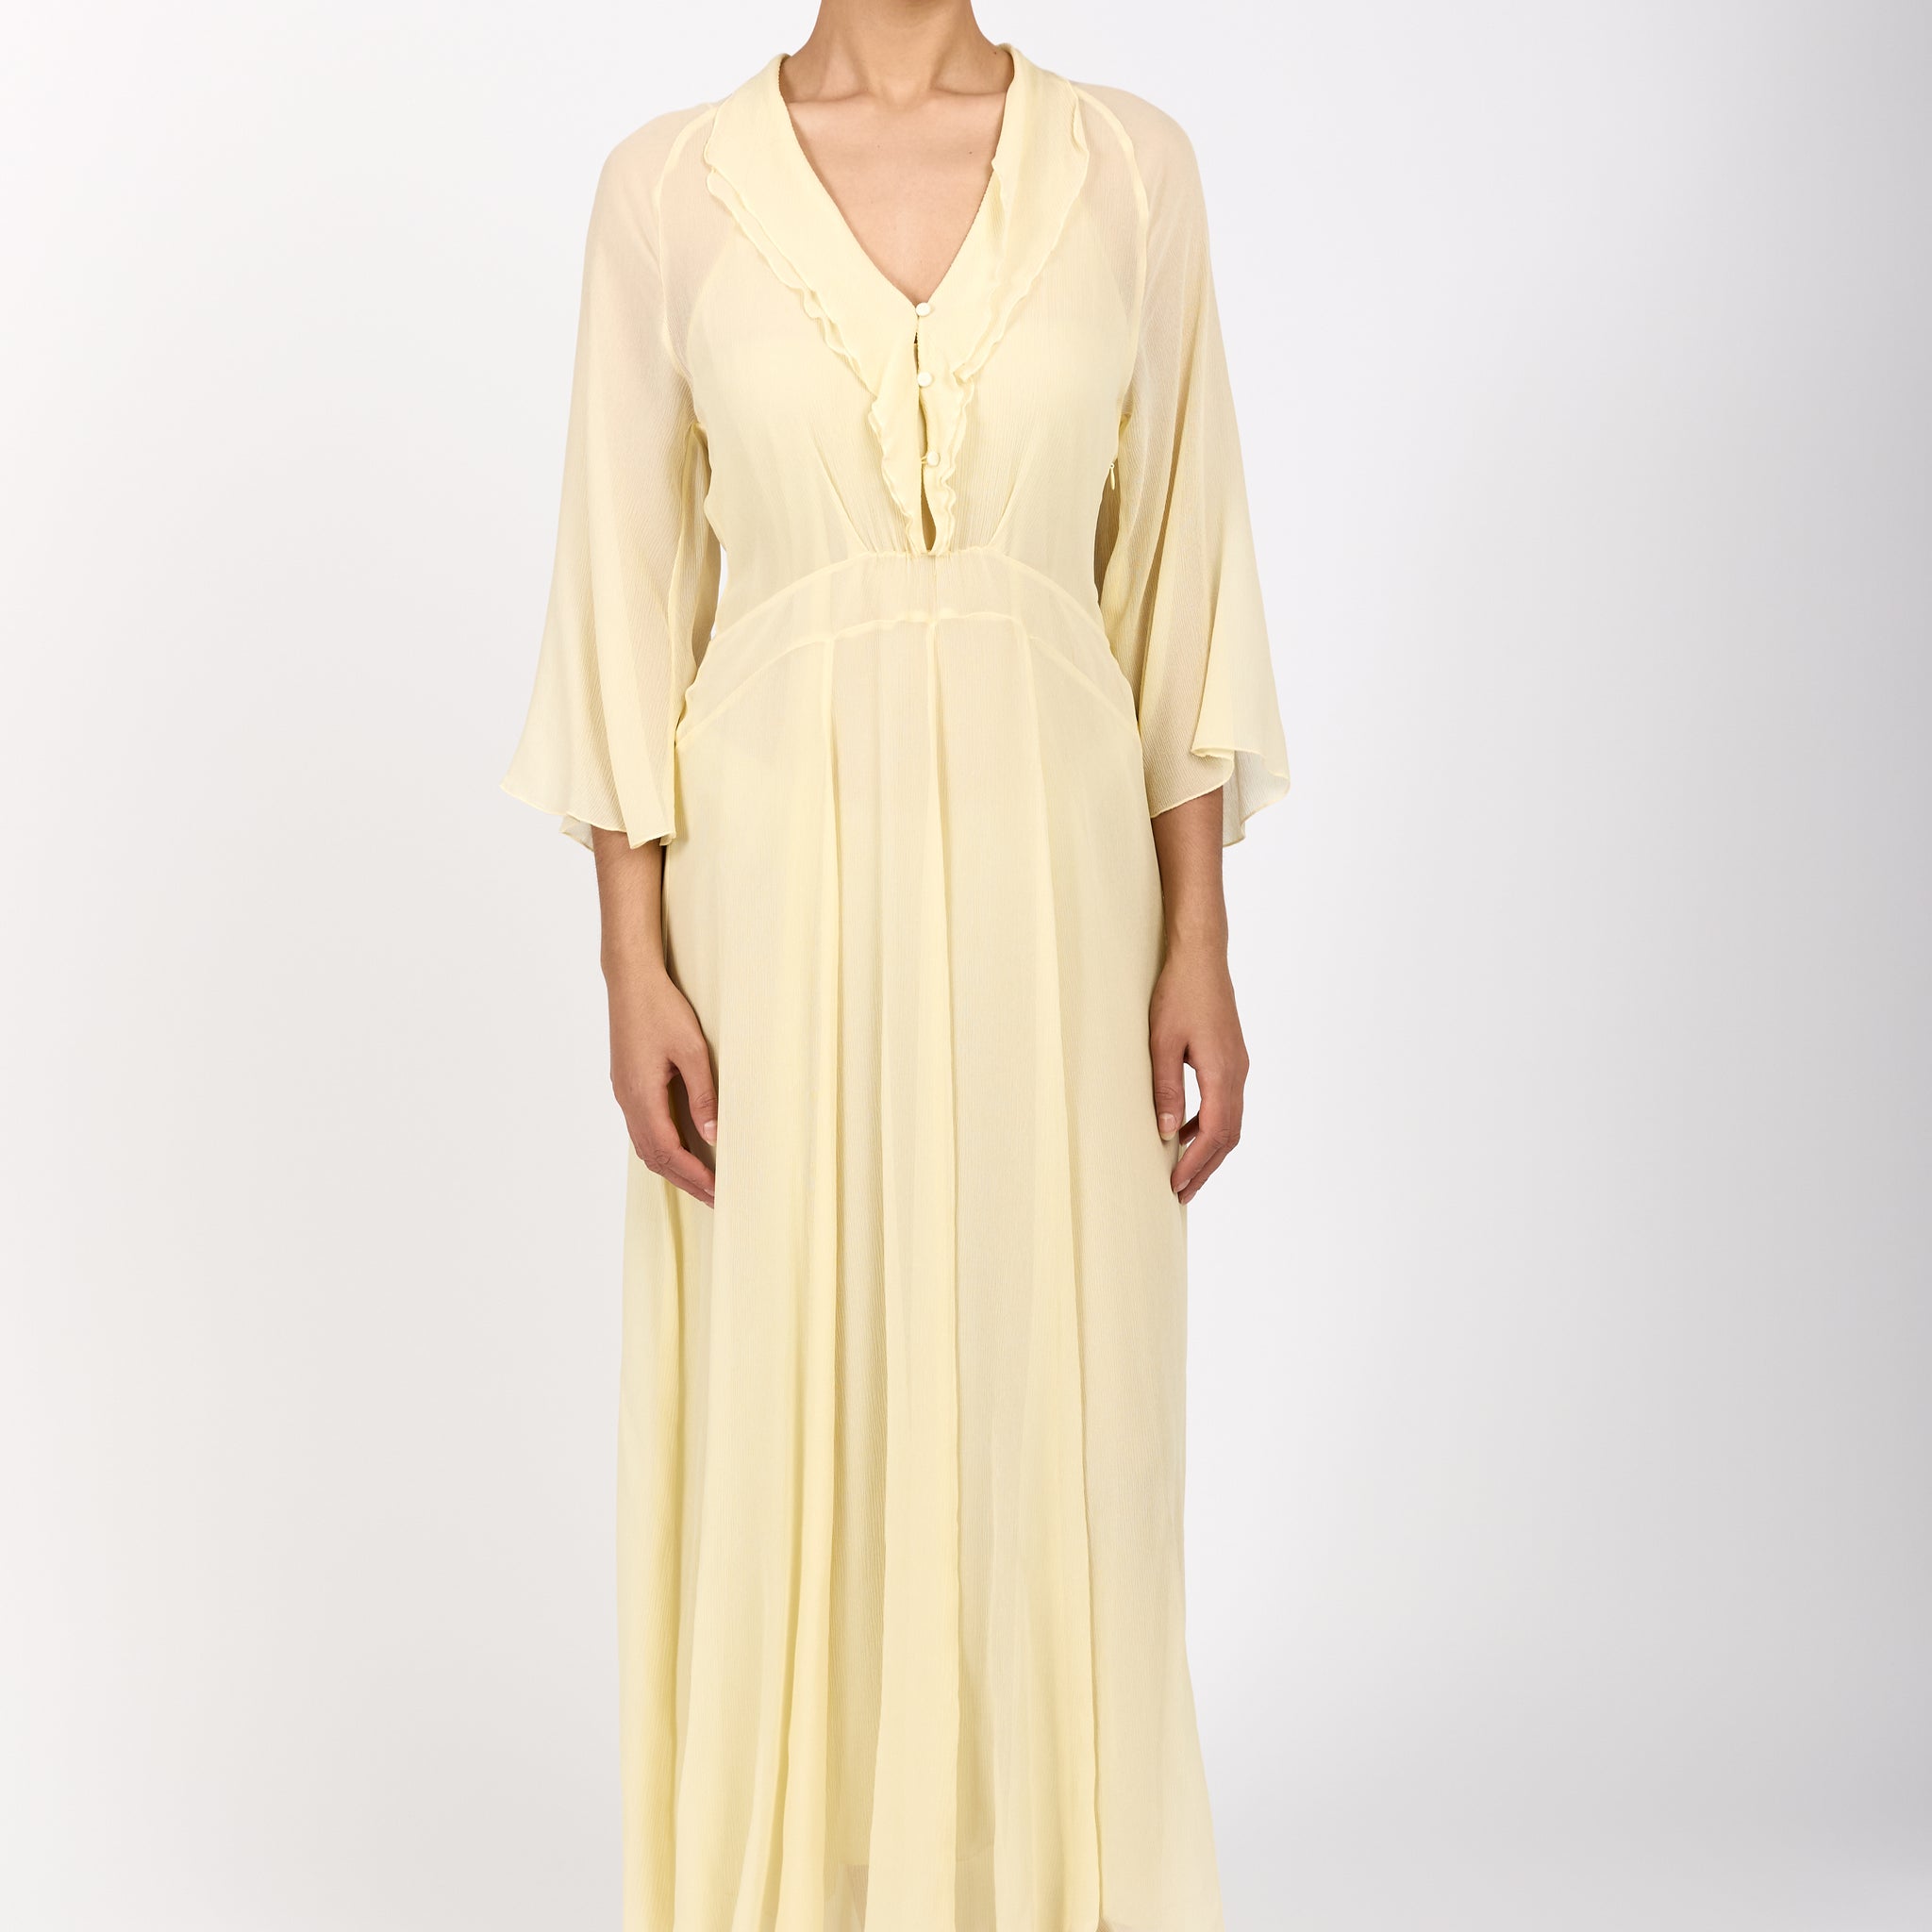 FORTE FORTE Creponne Silk Dress in Luce